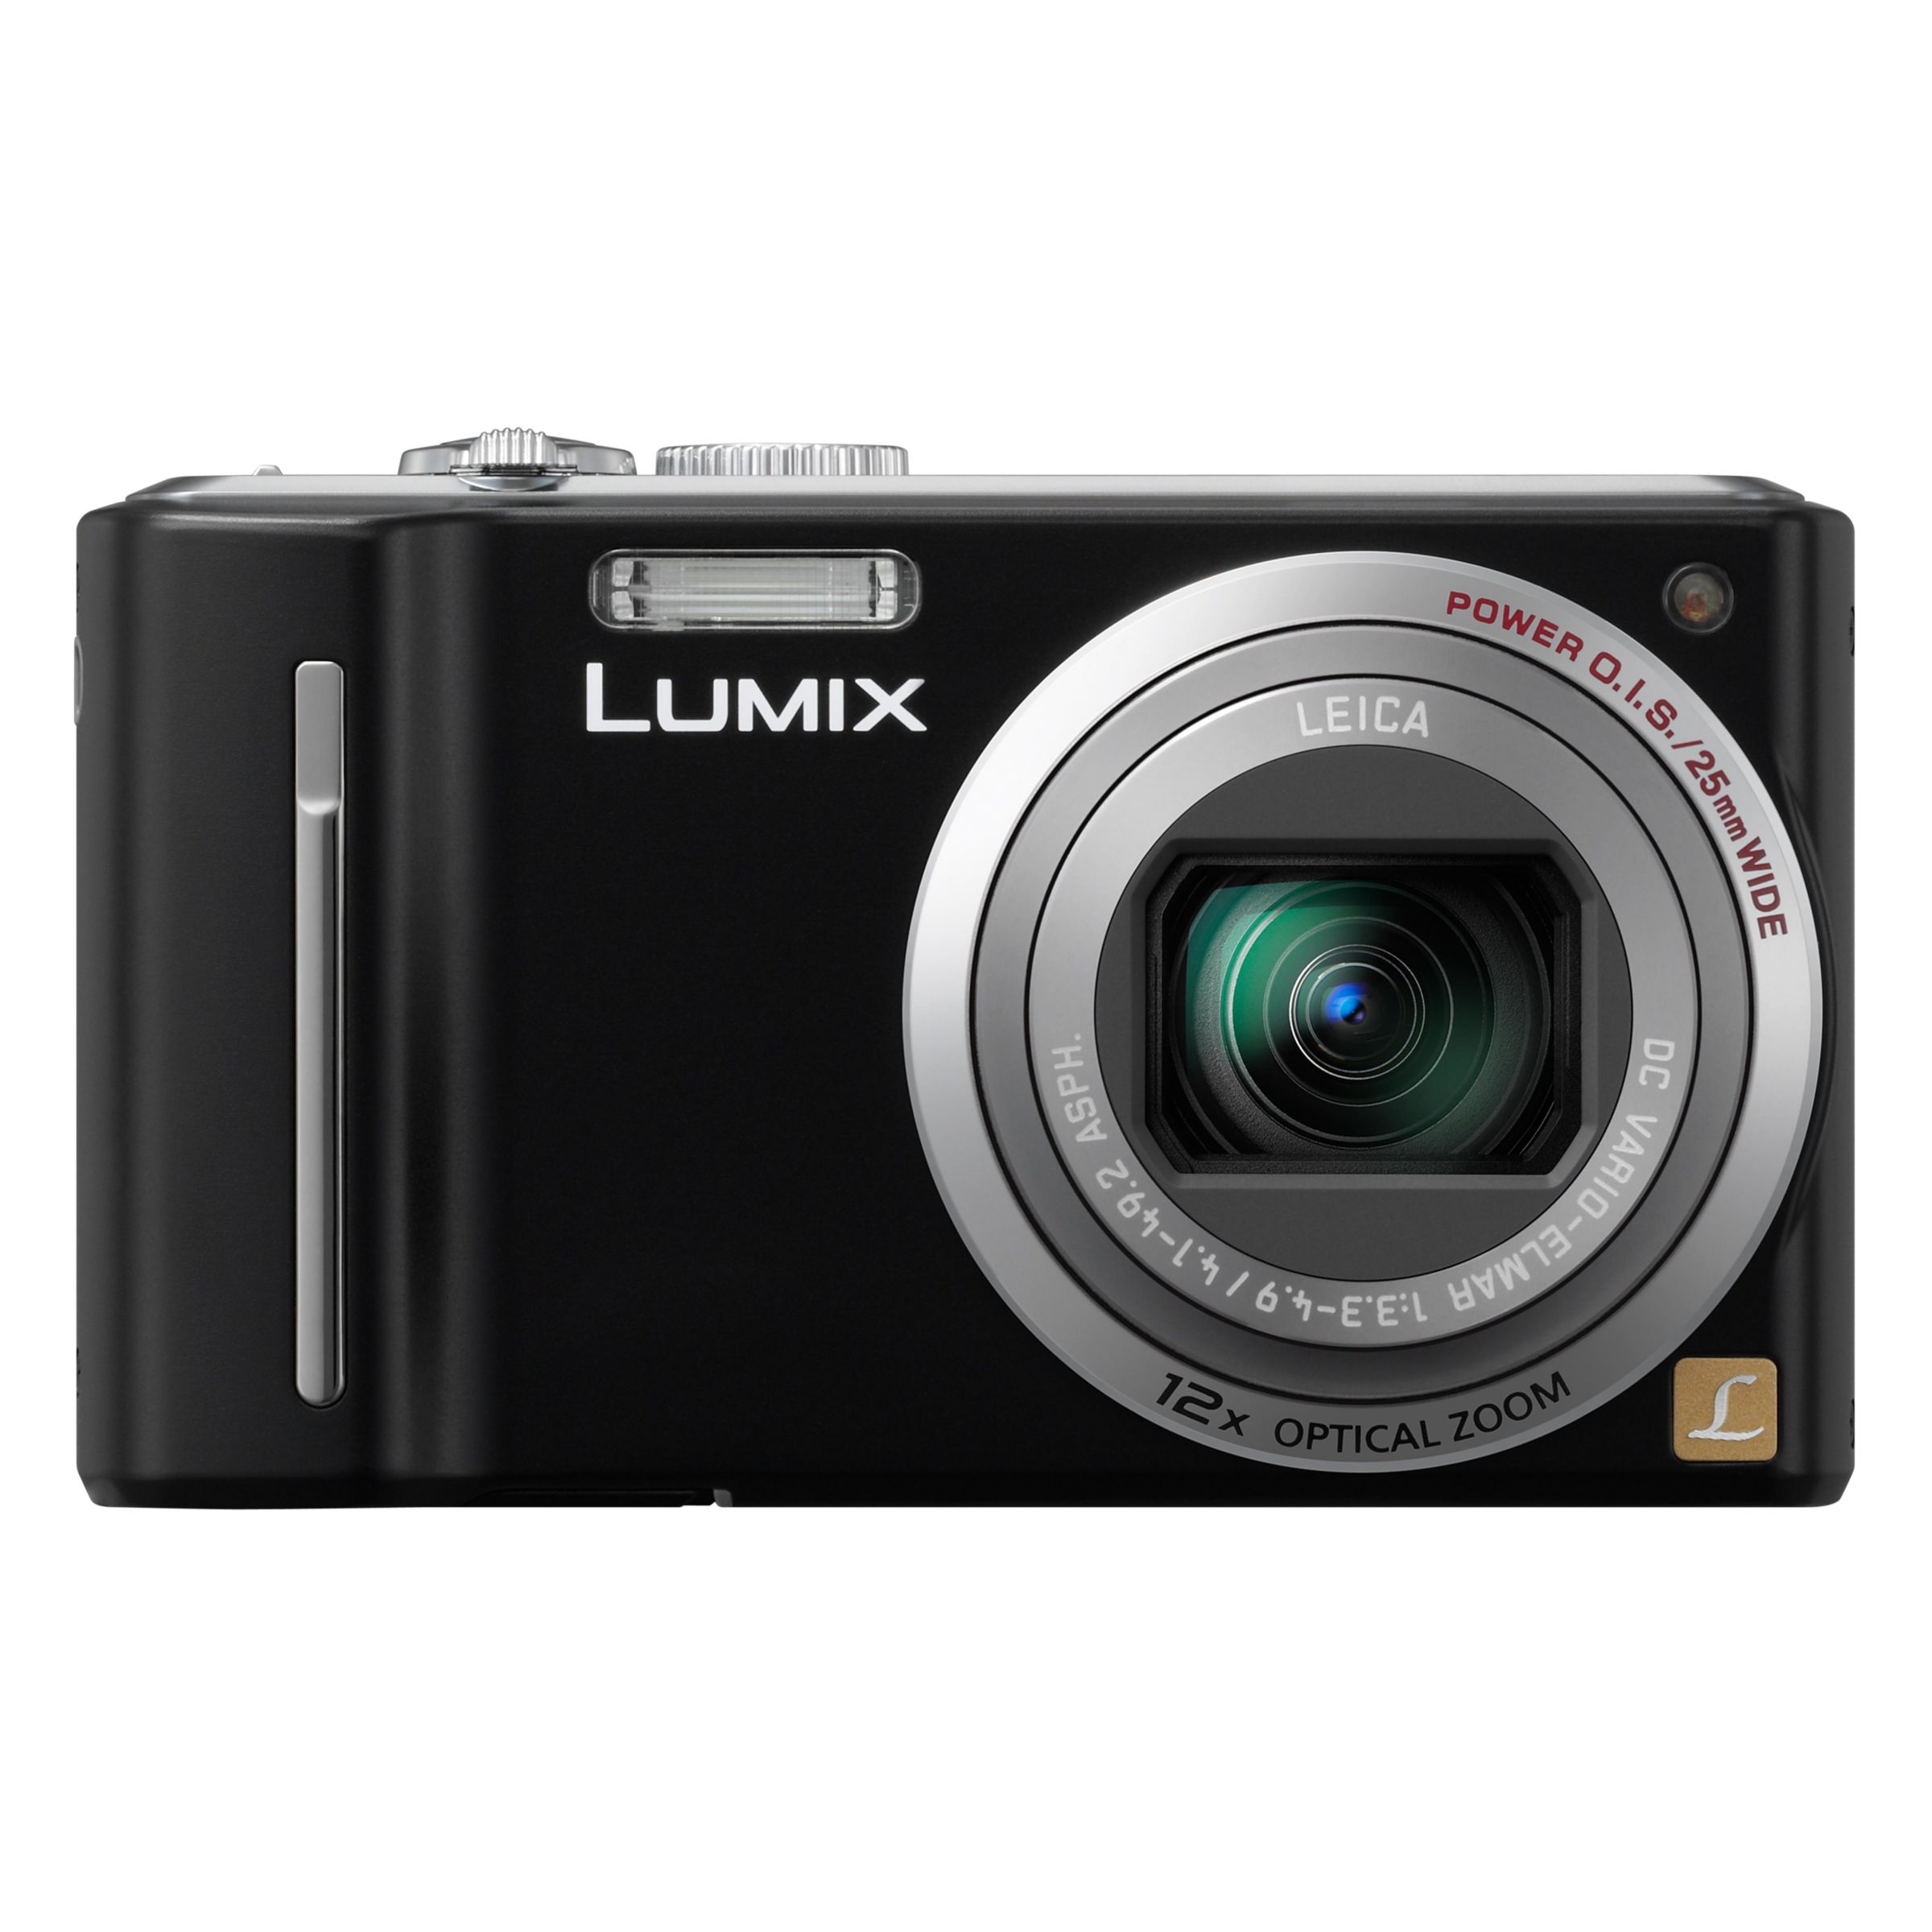 Panasonic Lumix DMC-TZ8EB-K Digital Camera, Black at John Lewis